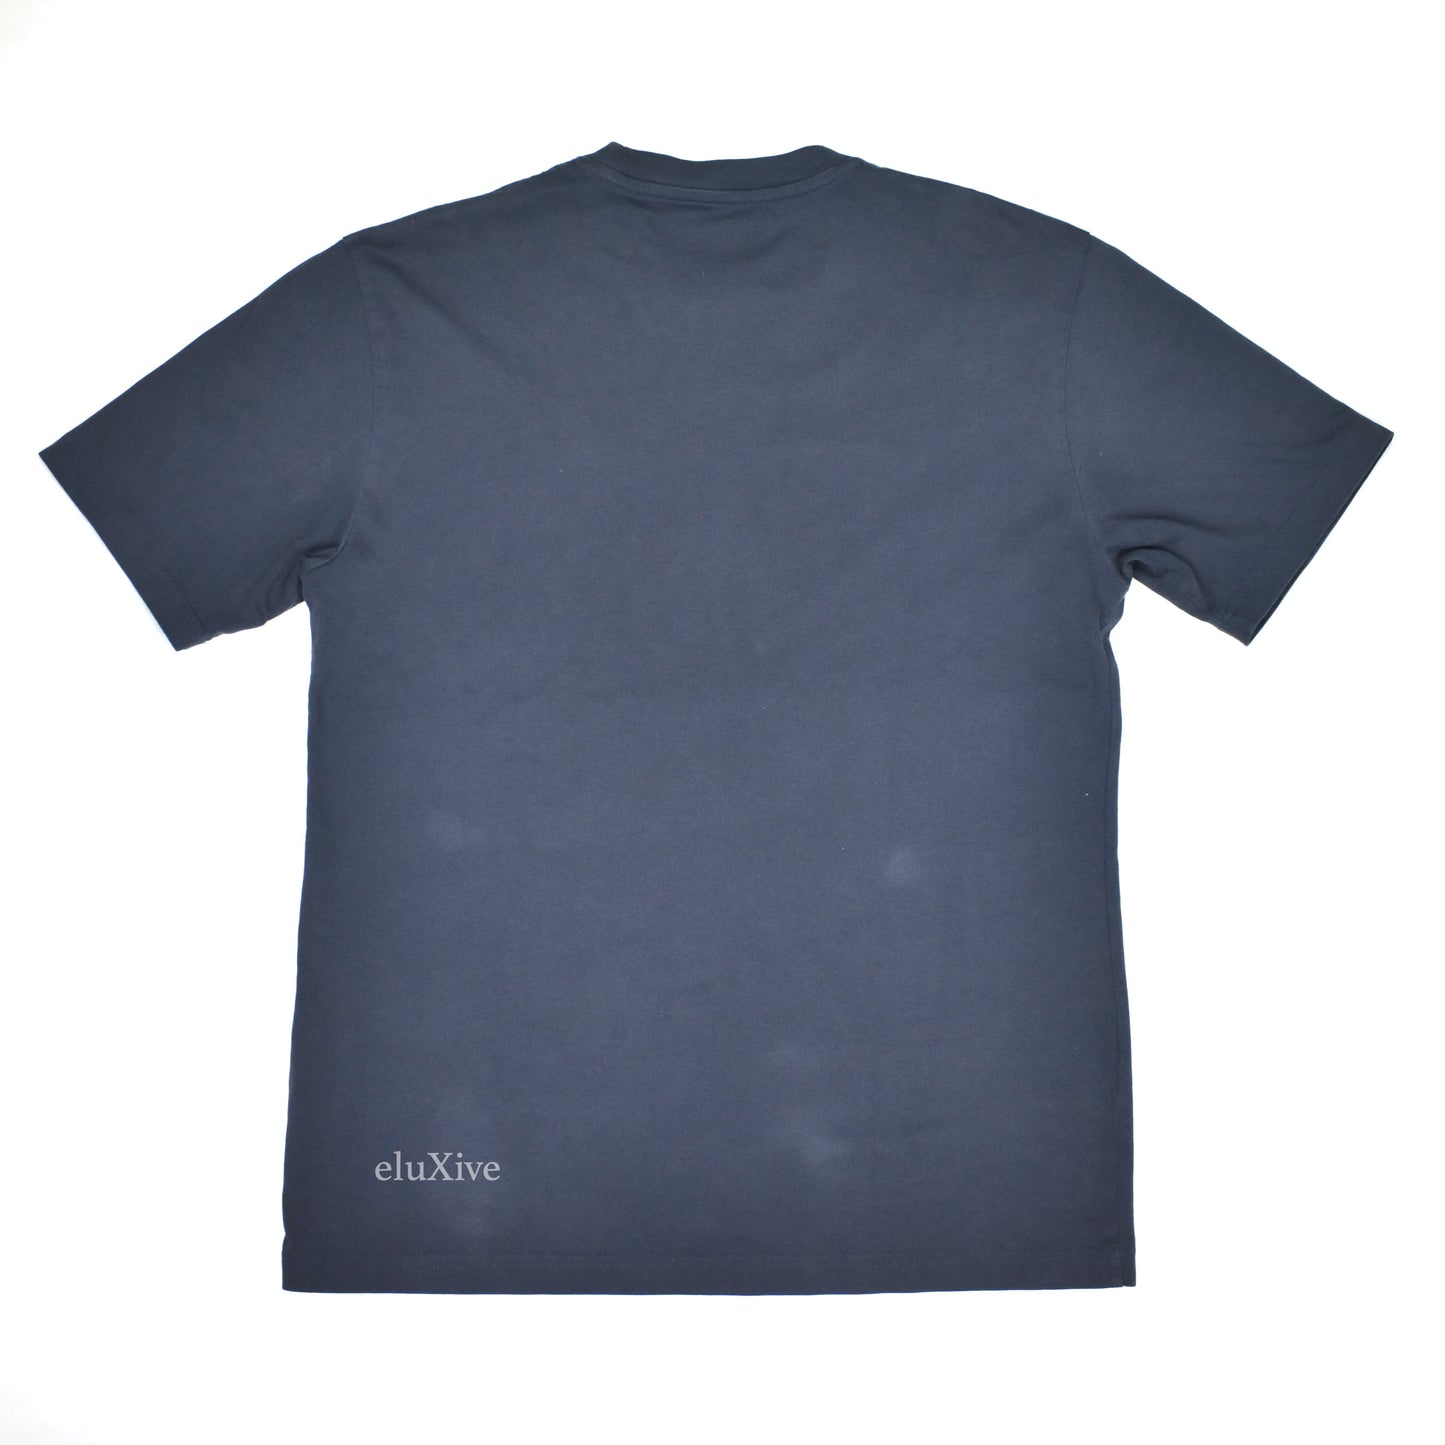 Palace - Jesus Saves Logo Print T-Shirt (Navy)